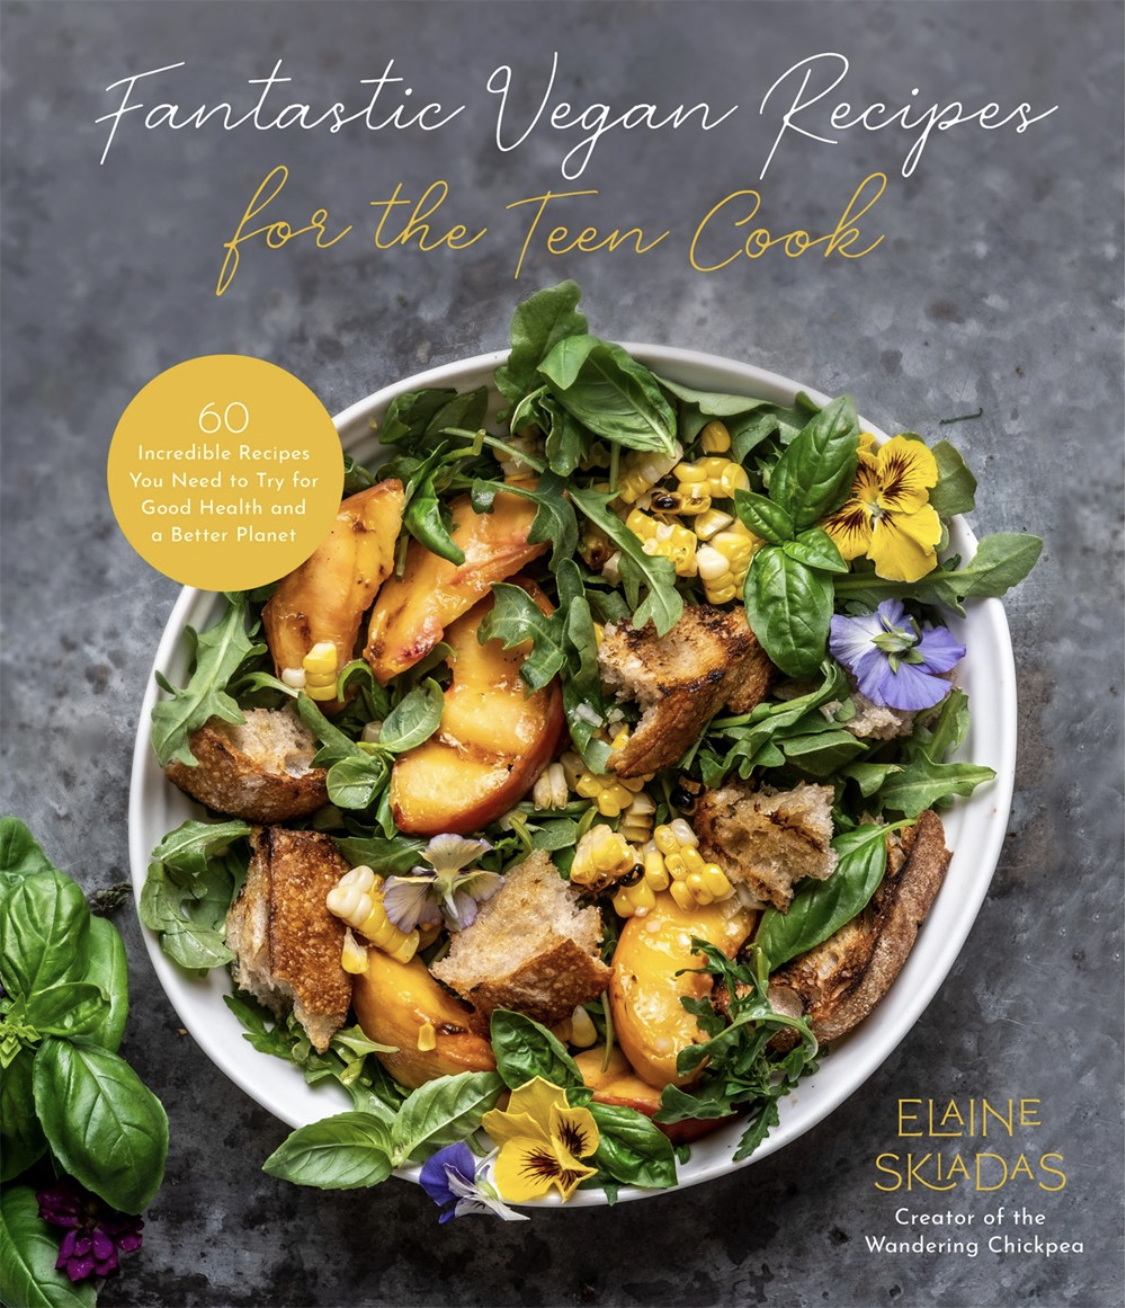 Fantastic Vegan Recipes for the Teen Cook book cover